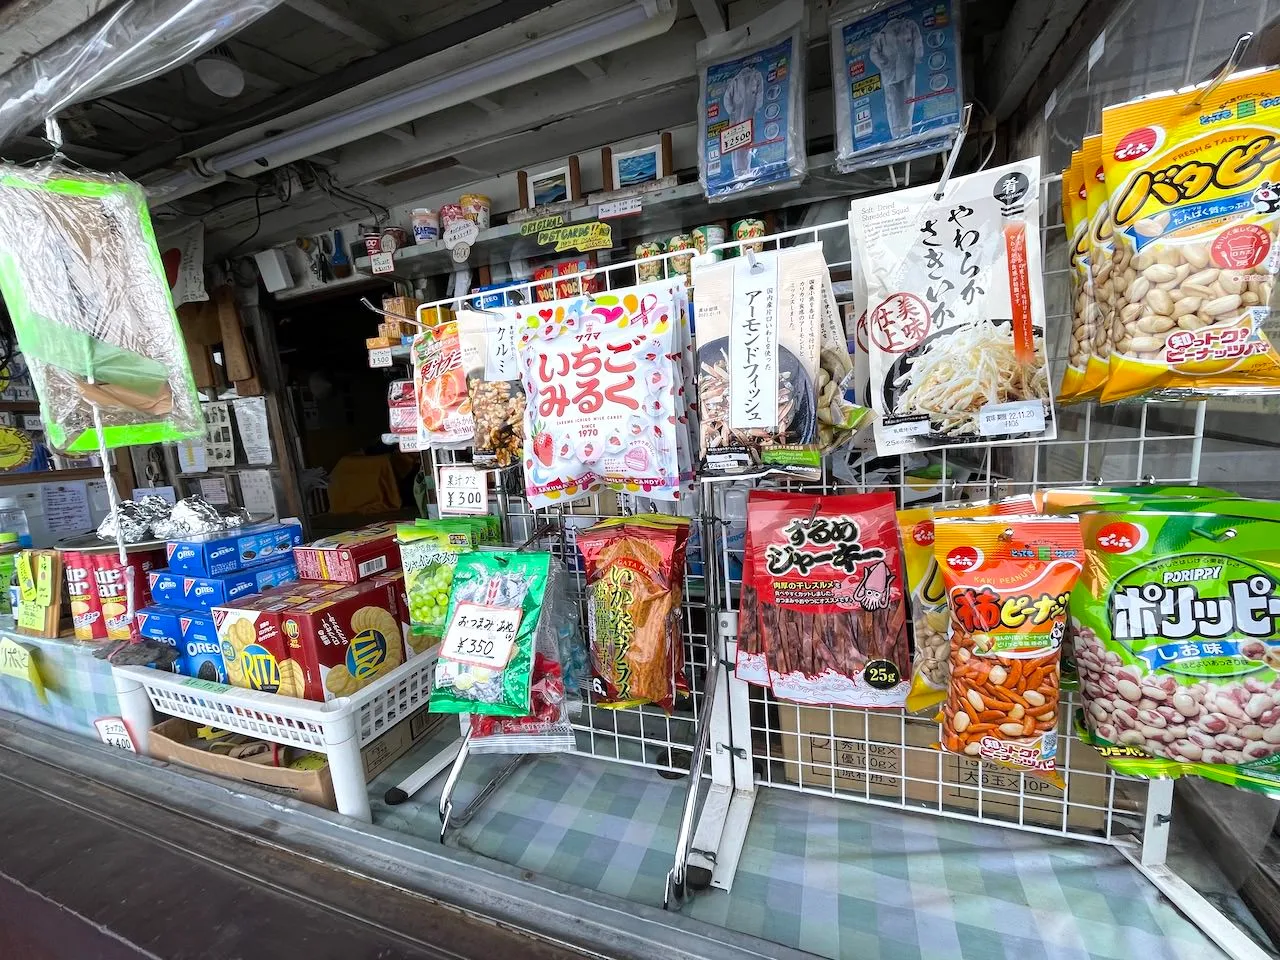 Mt. Fuji mountain huts selling various snacks